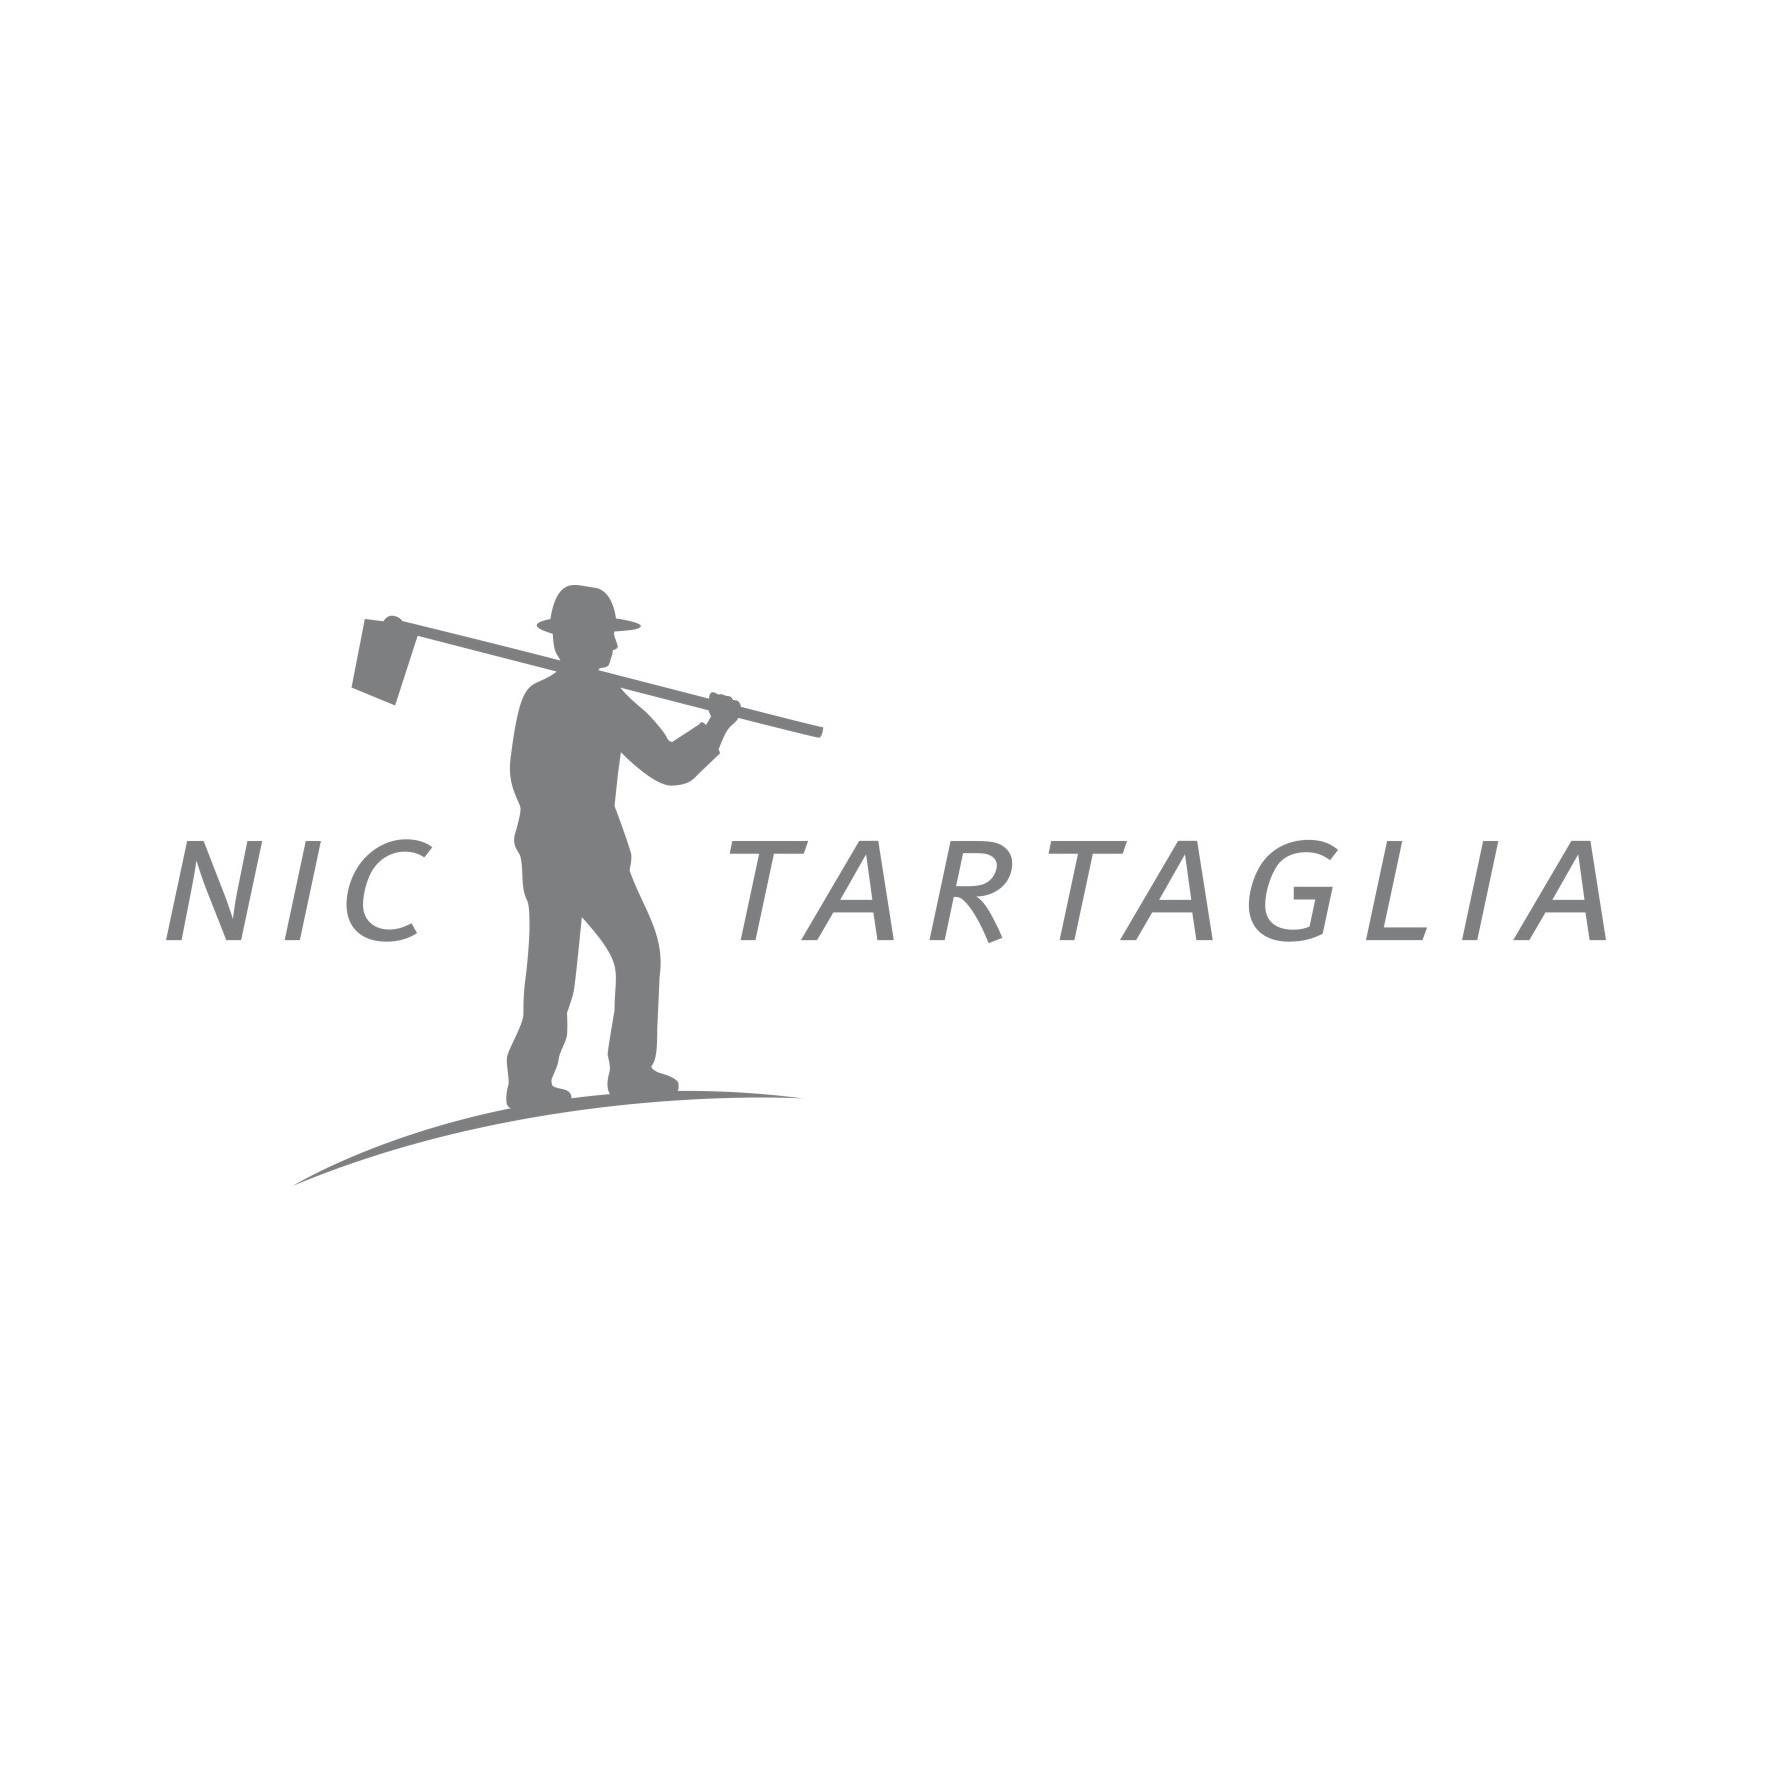 Nic Tartaglia